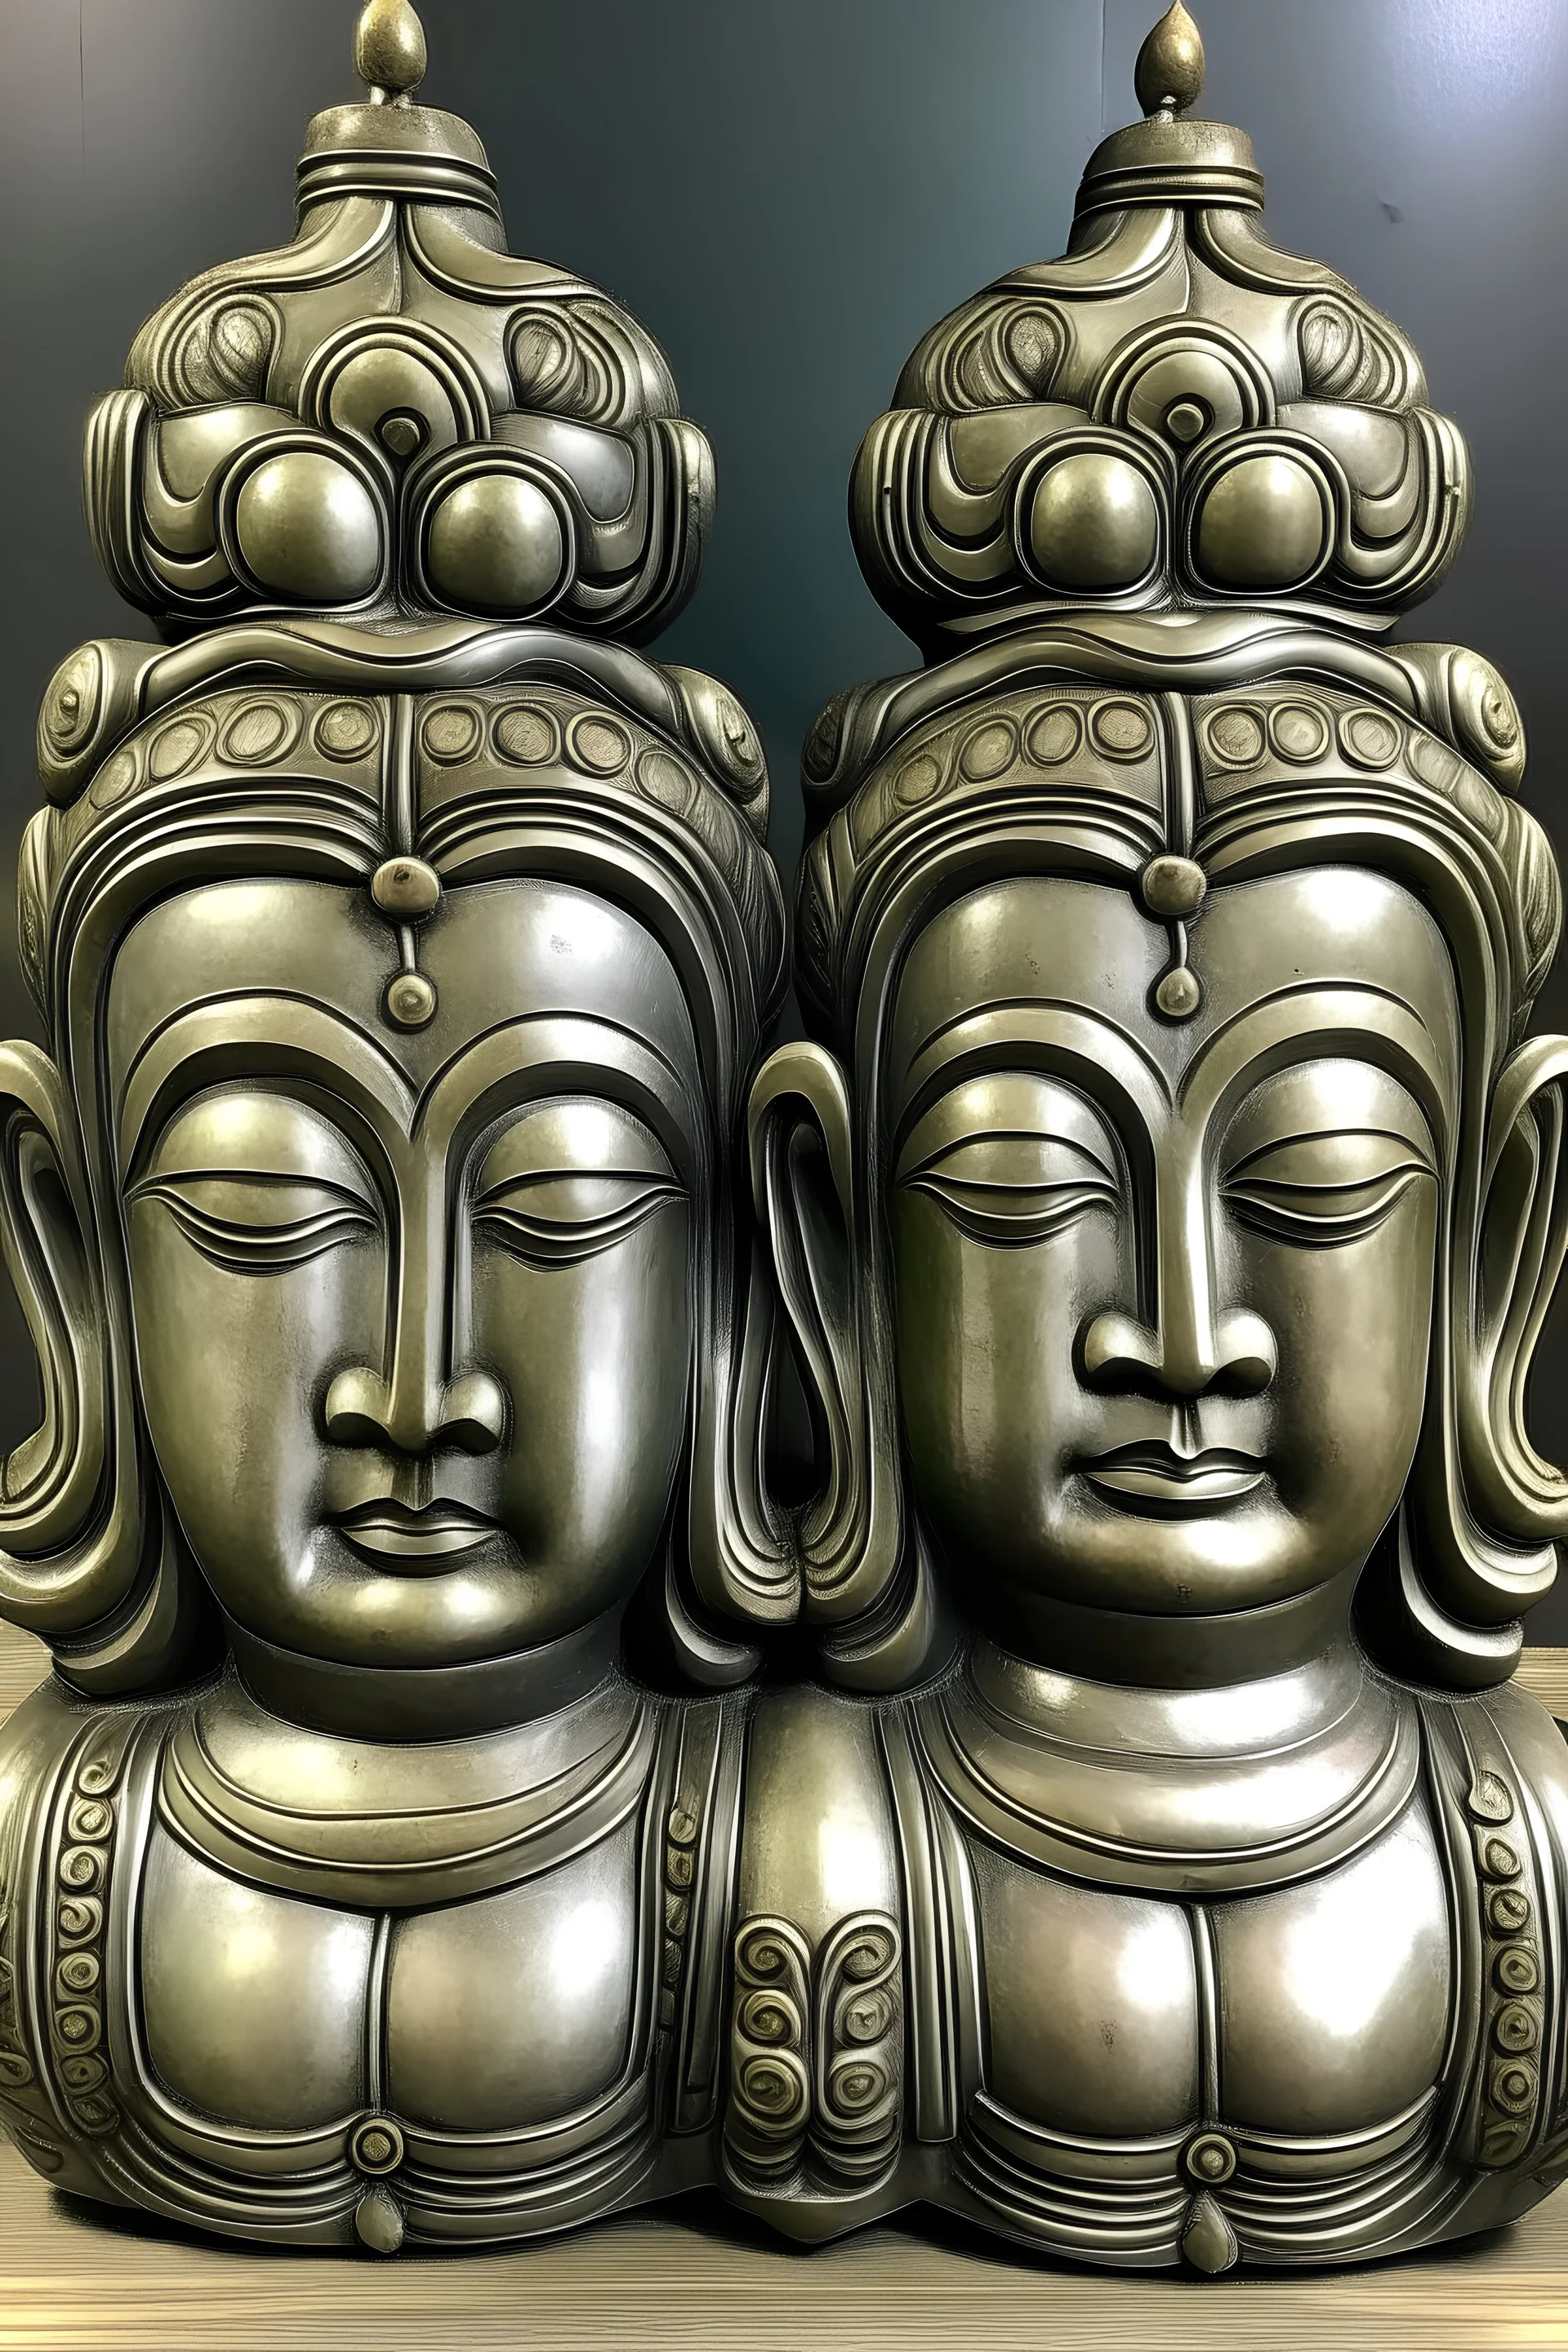 four-faced buddha statue